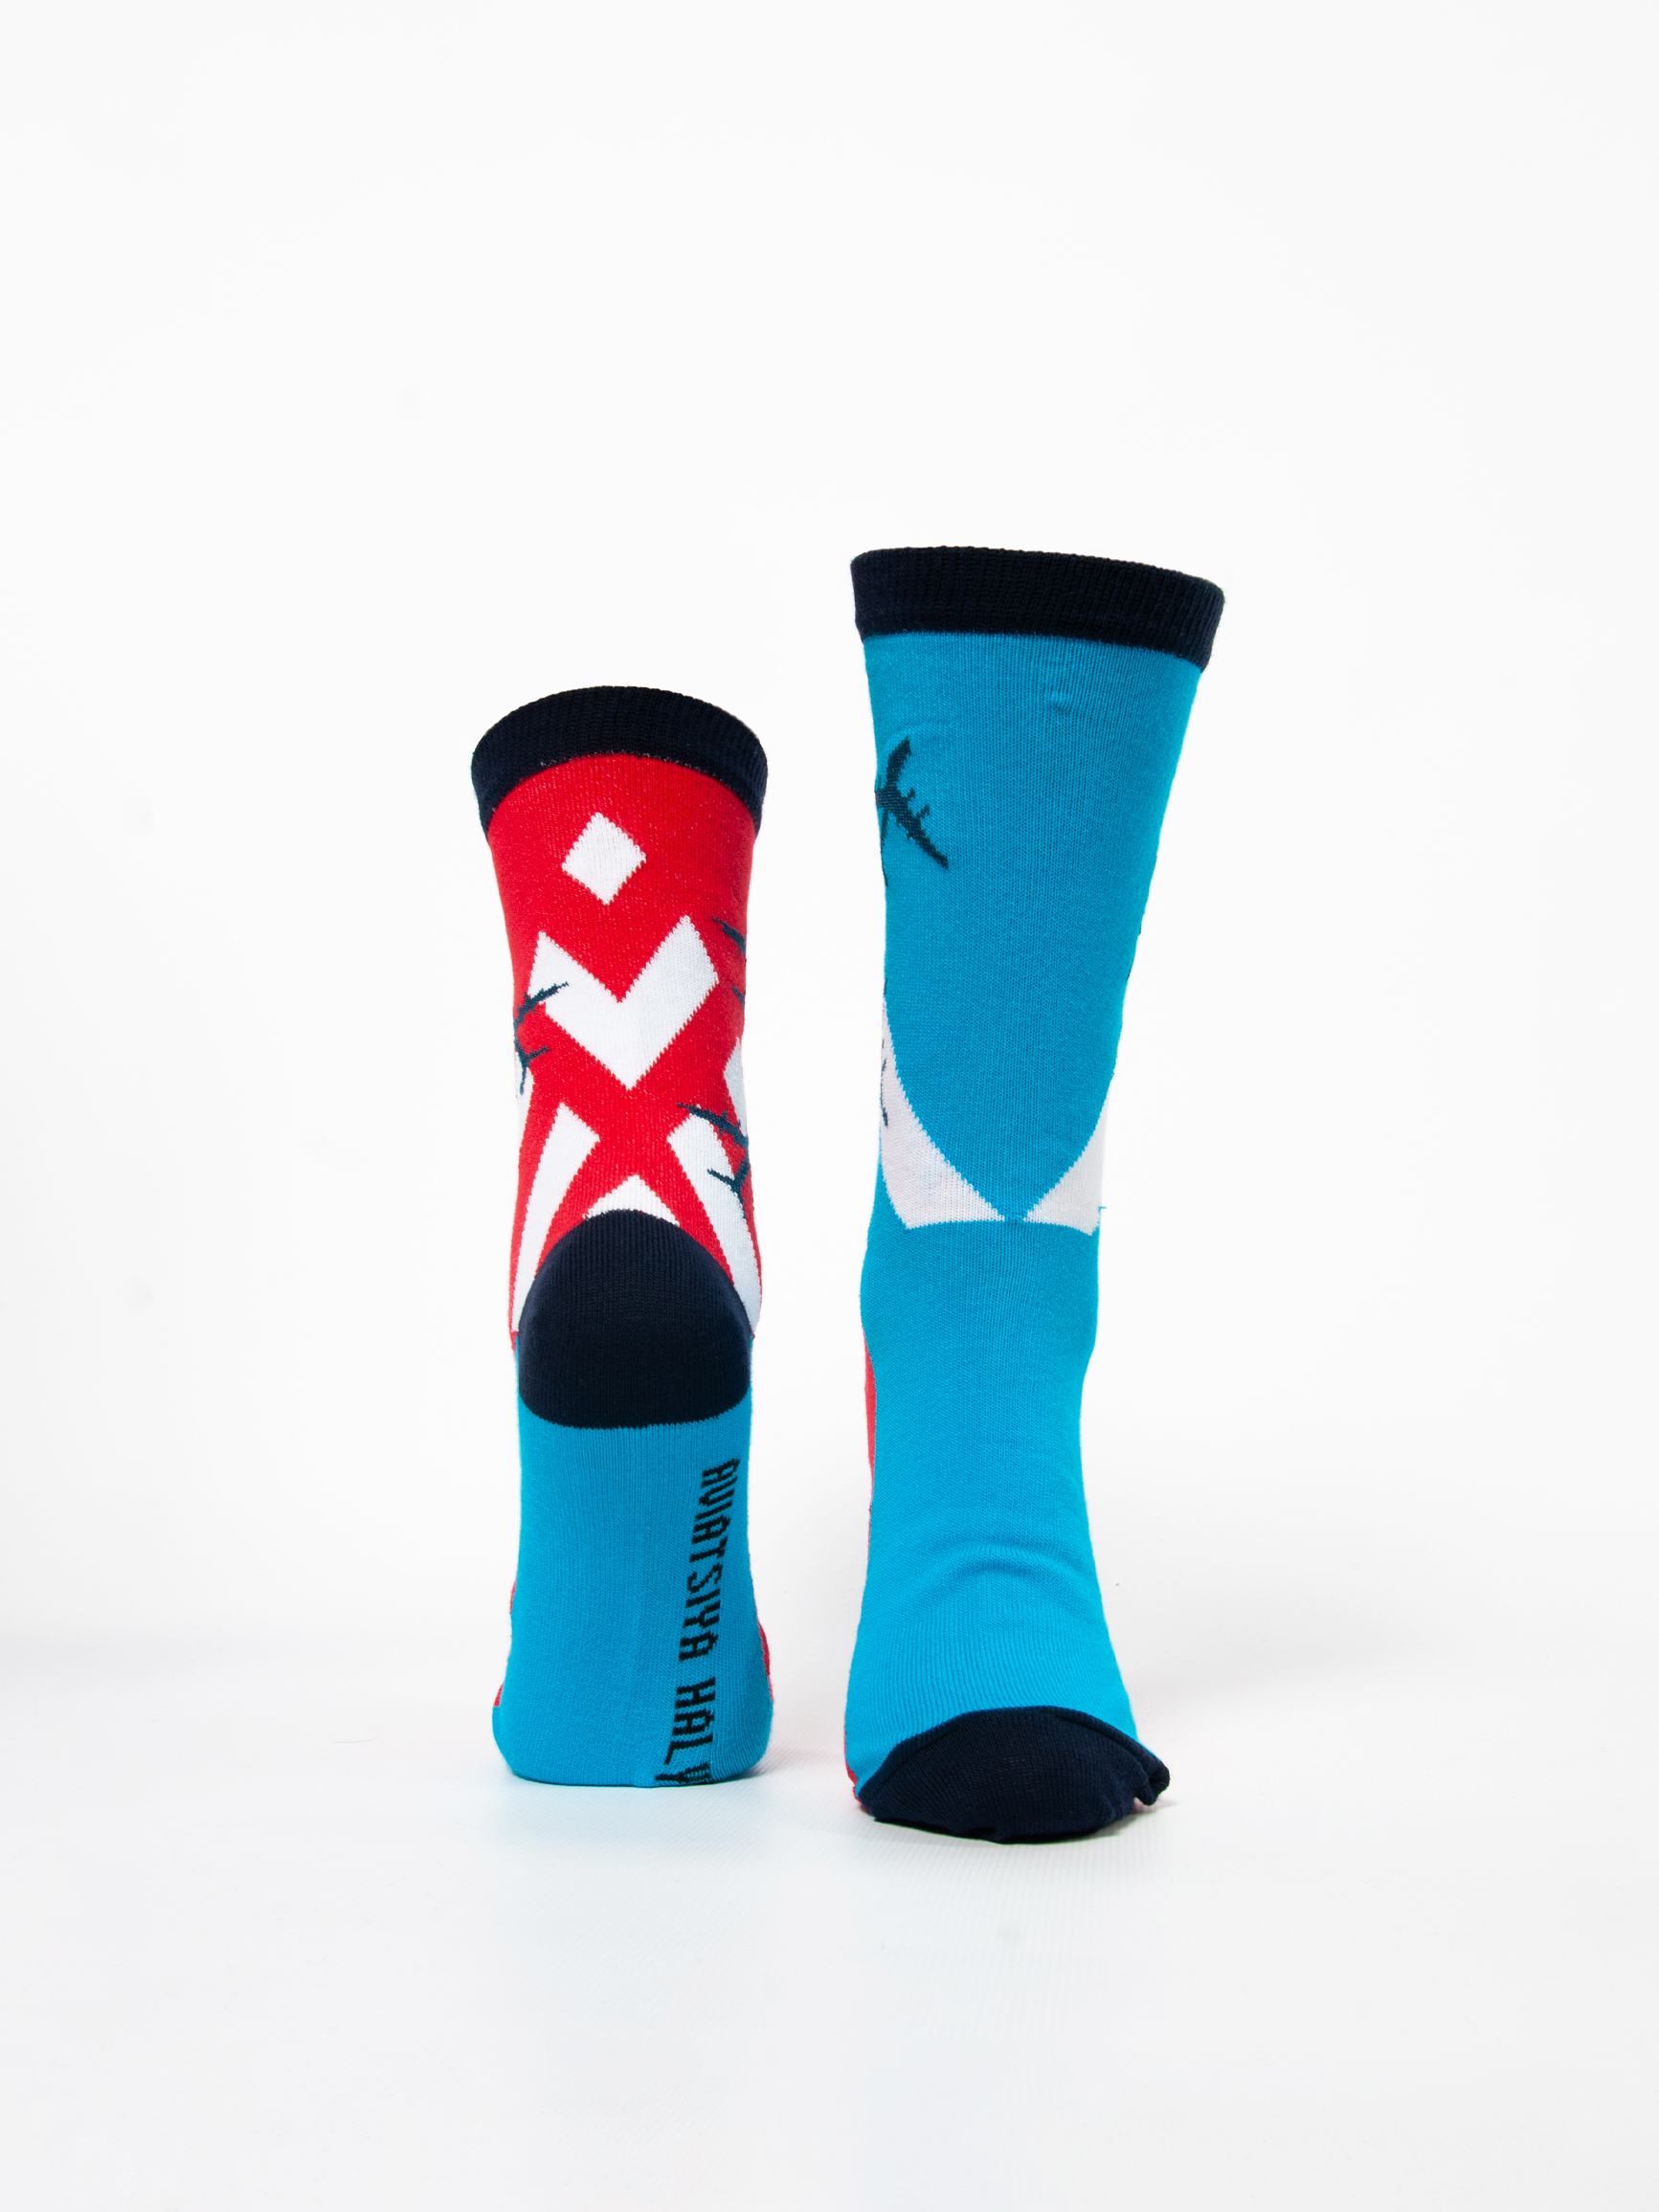 Socks Ruslan. Color turquoise. Socks: unisex
Material: 95% cotton, 5% elastane.